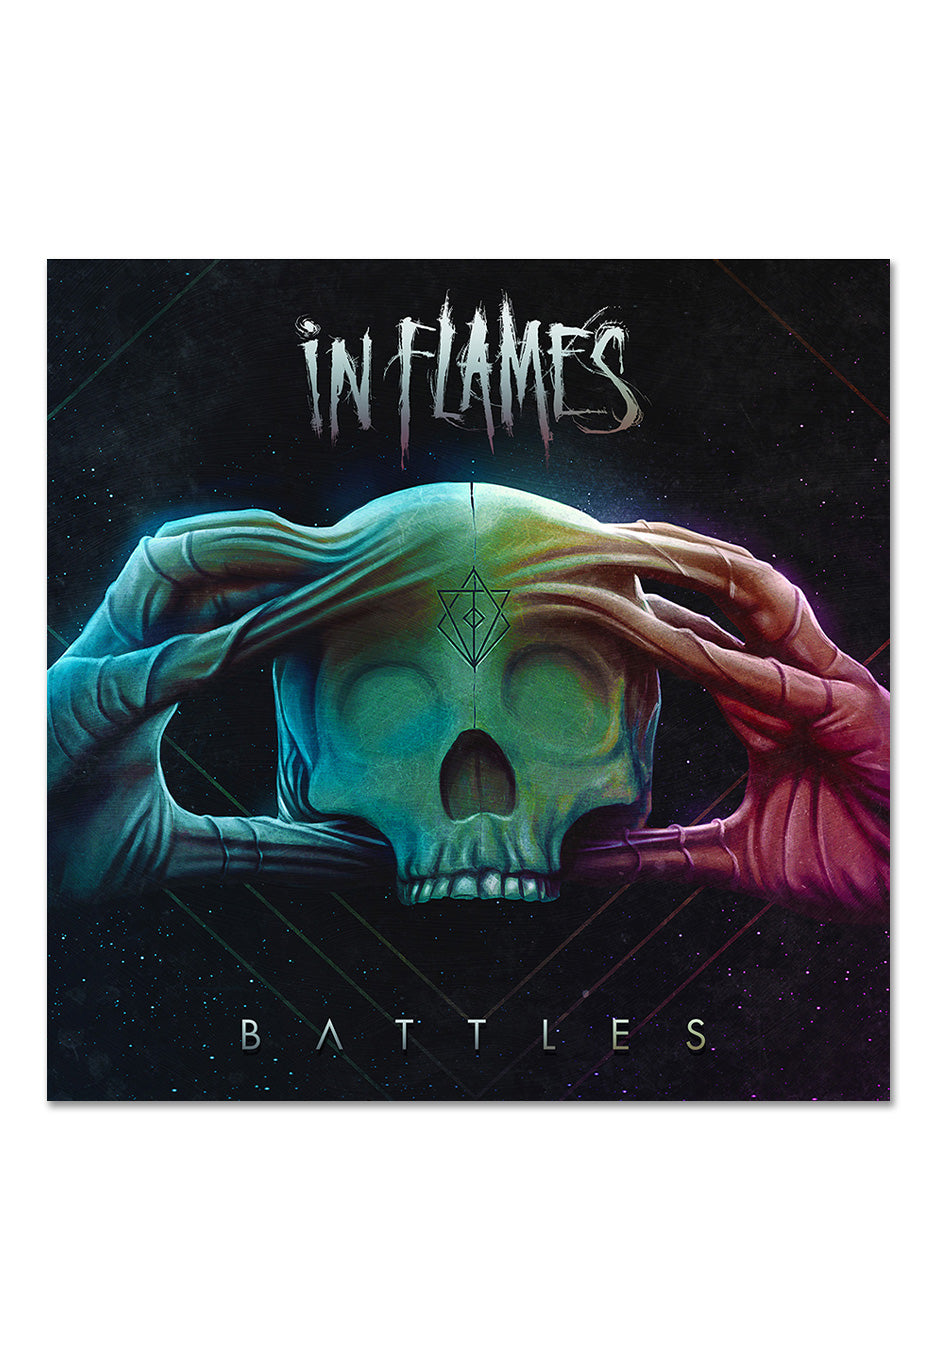 In Flames - Battles Ltd. Curacao - Colored 2 Vinyl